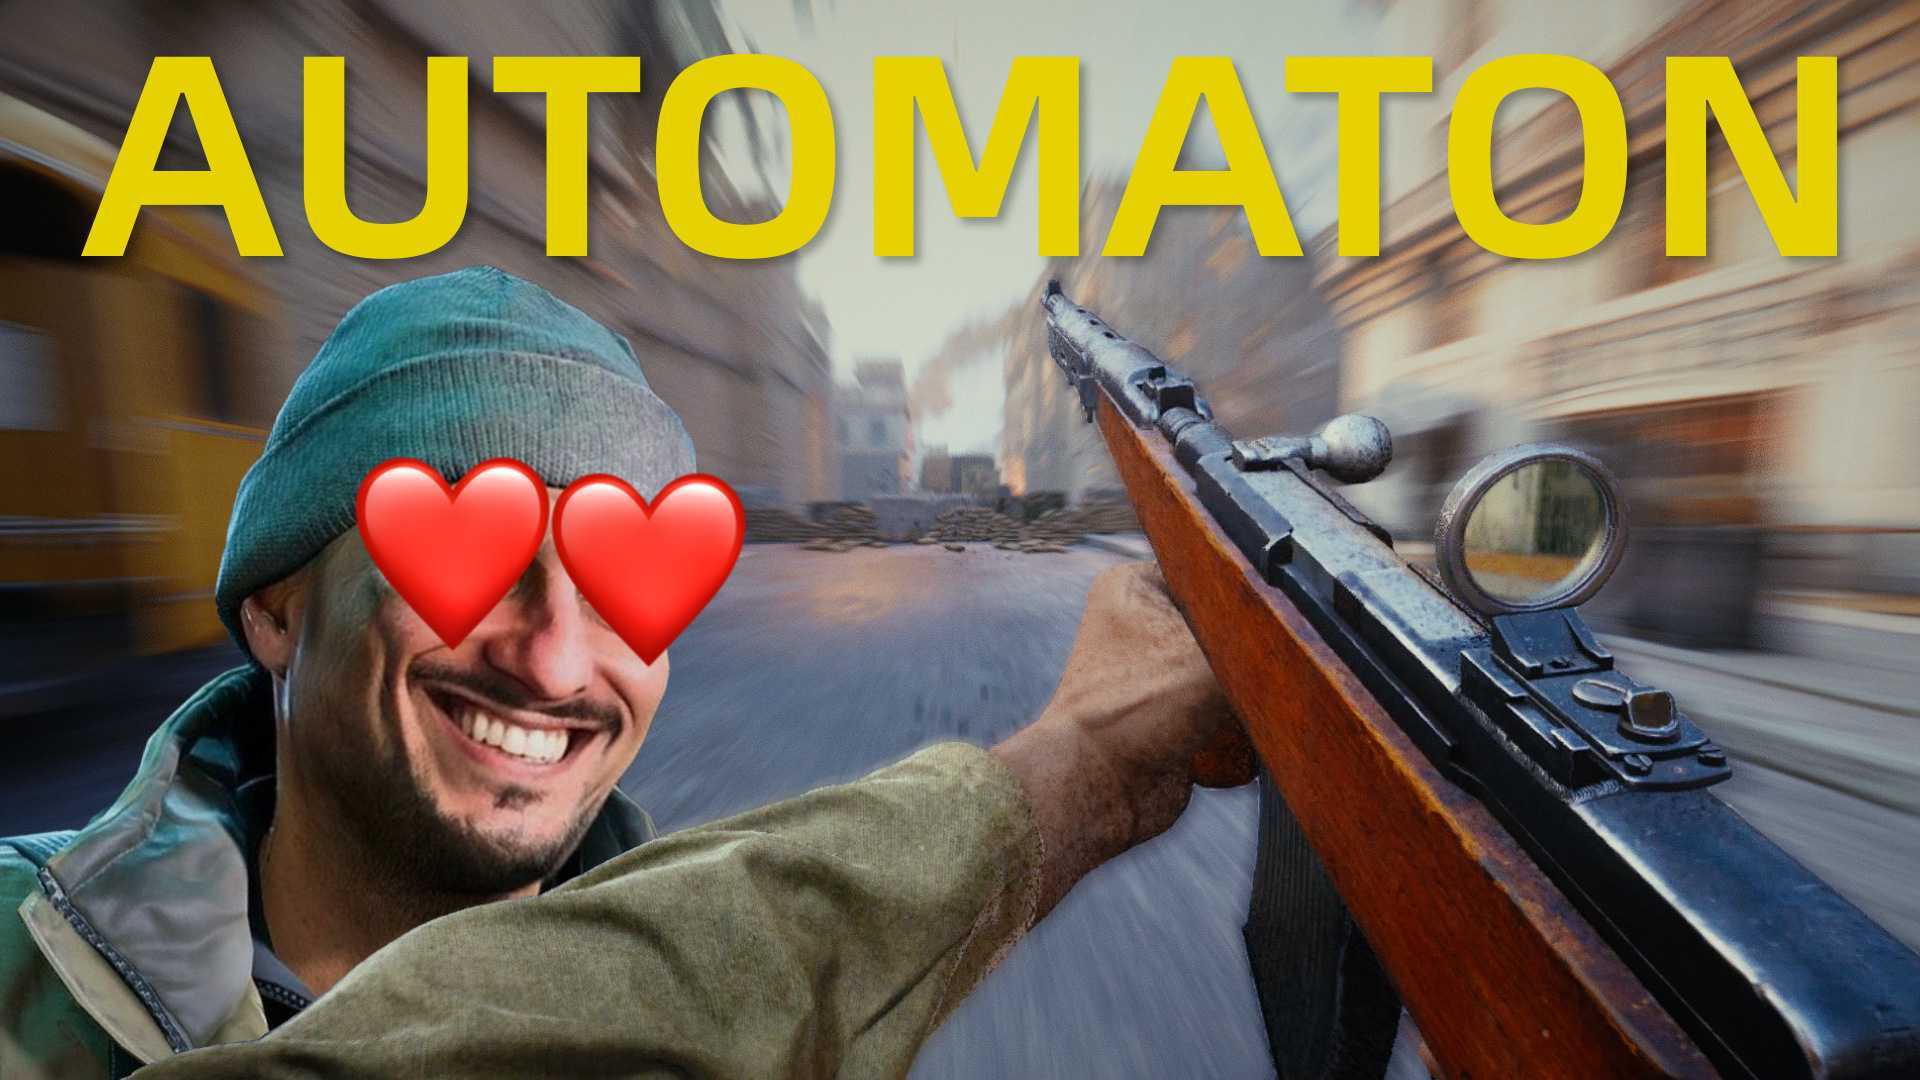 【COD18】I LOVE AUTOMATON  -- 这是一个特别的游戏集锦